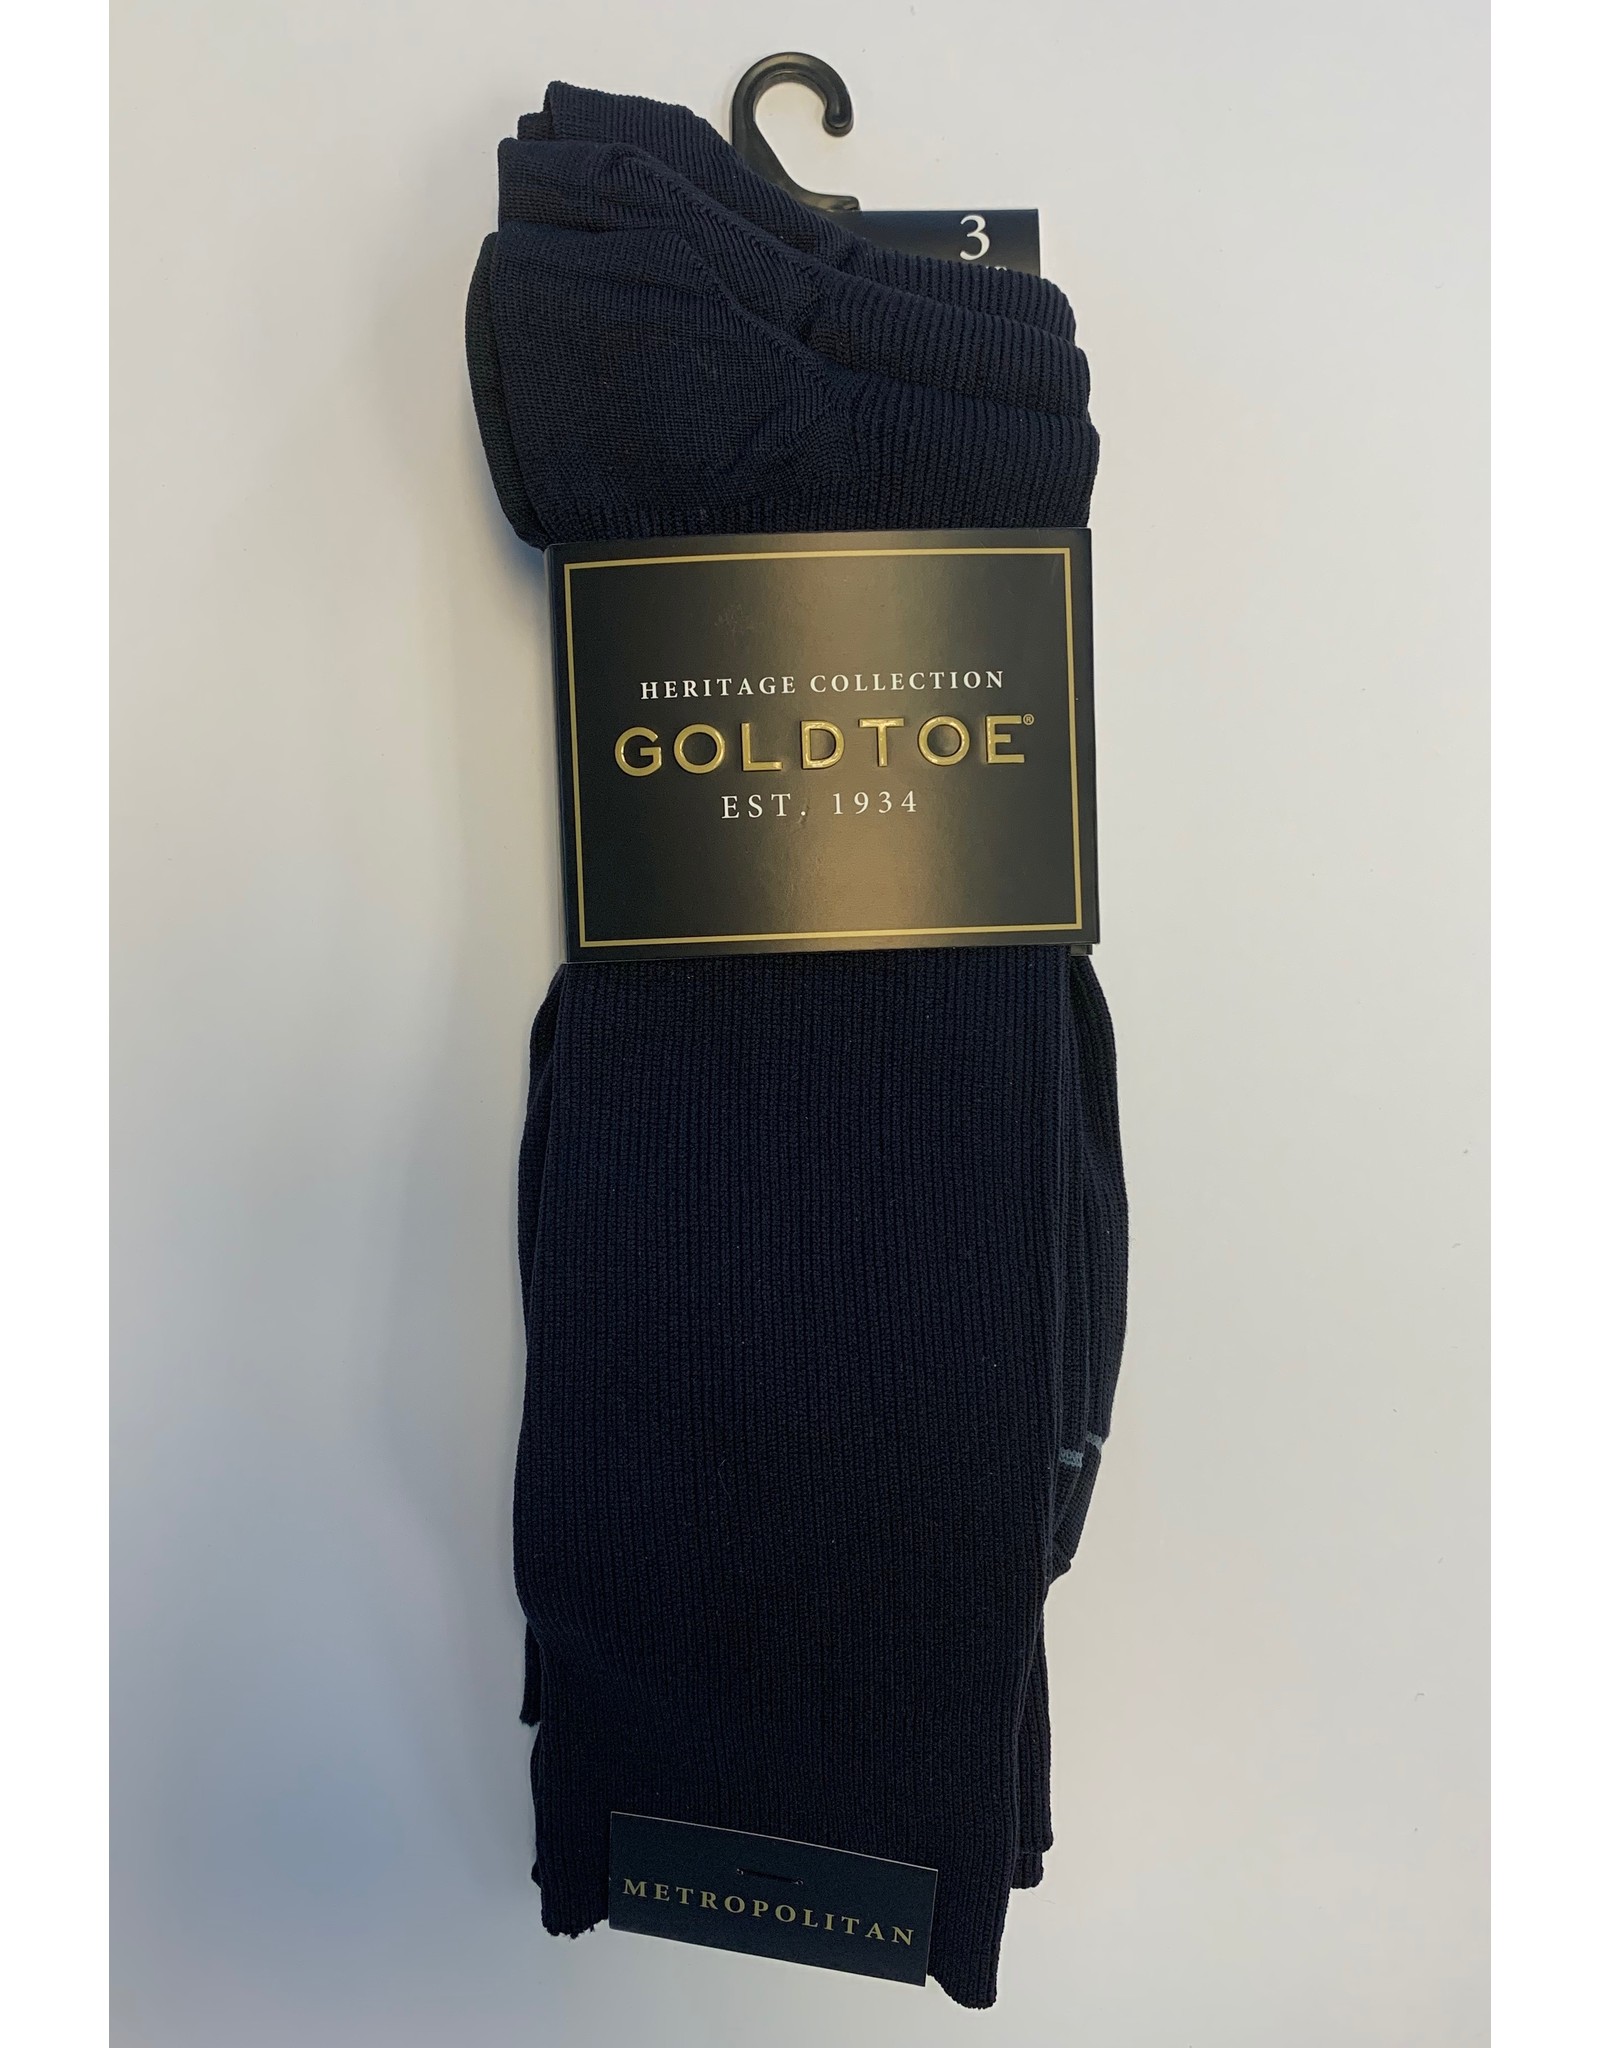 Goldtoe Goldtoe Men's Metropolitan Reinforced Toe Socks - 3 Pack 101S